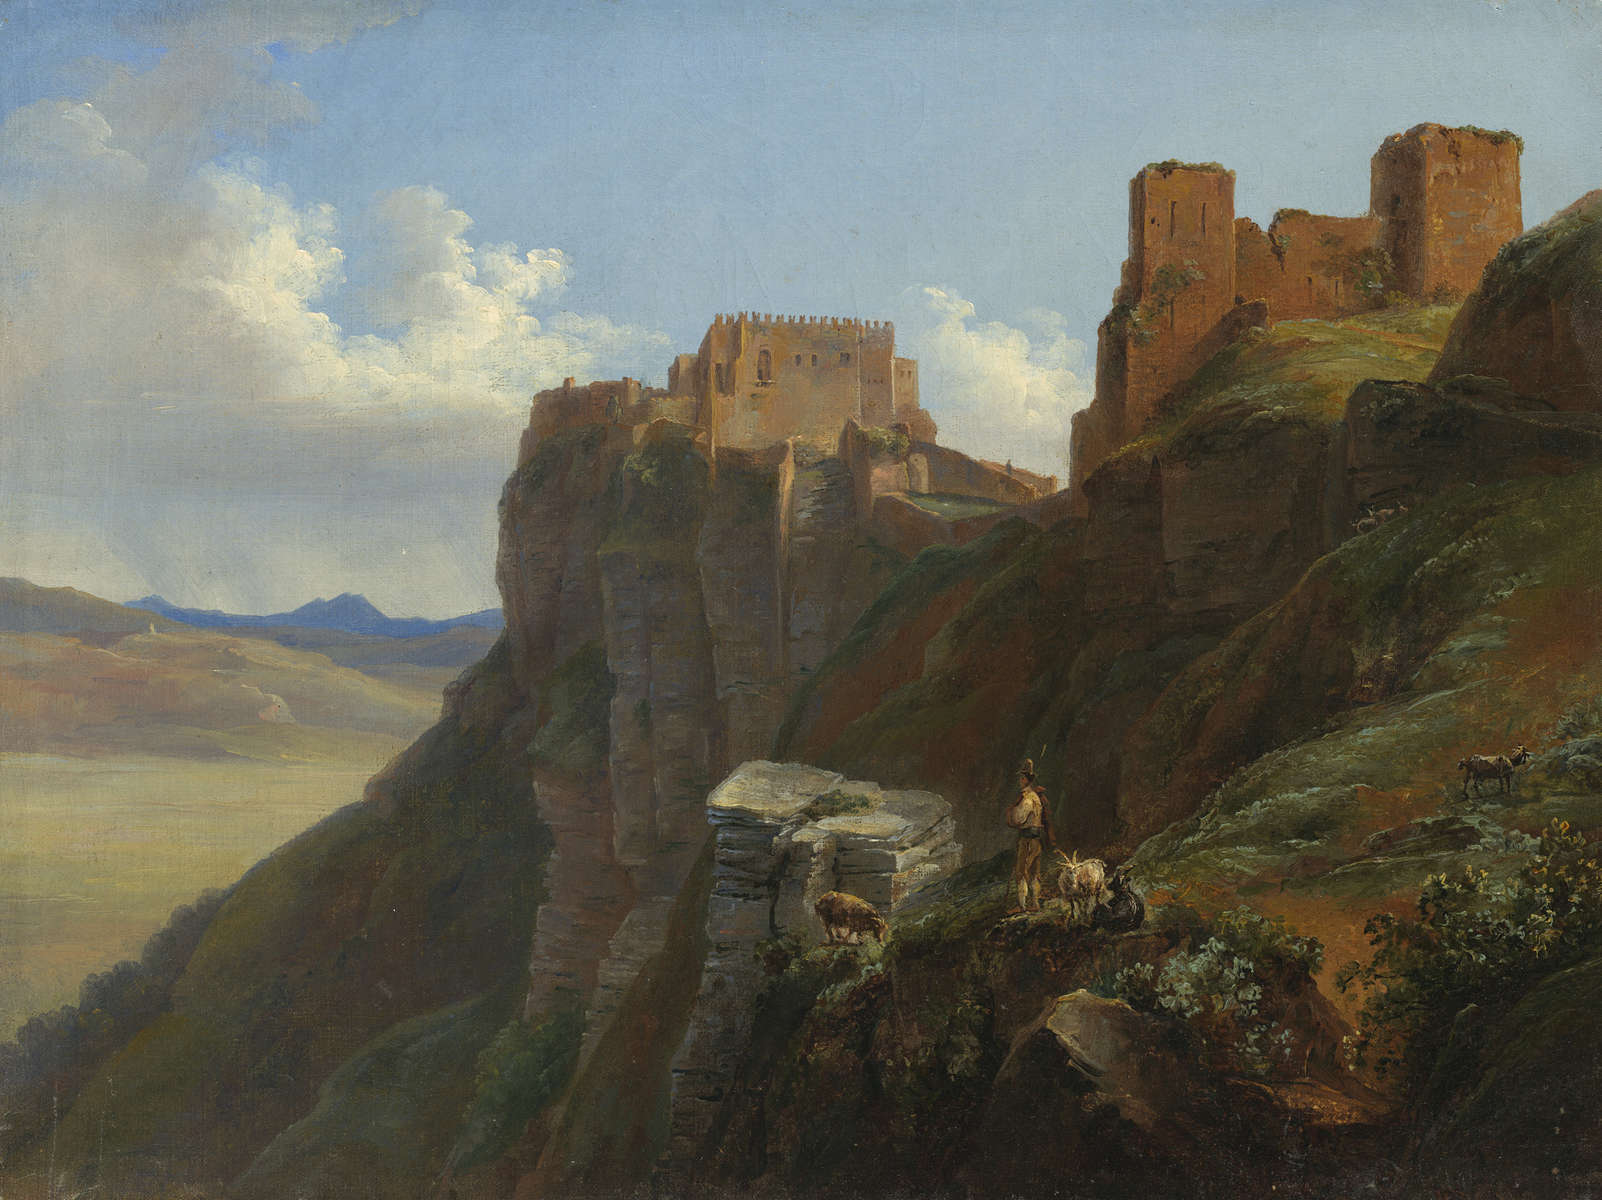 Louise-Joséphine Sarazin de Belmont (French, 1790 - 1870 ), View of the Castello di San Giuliano, near Trapani, Sicily, c. 1824/1826, oil on canvas, Gift of Frank Anderson Trapp